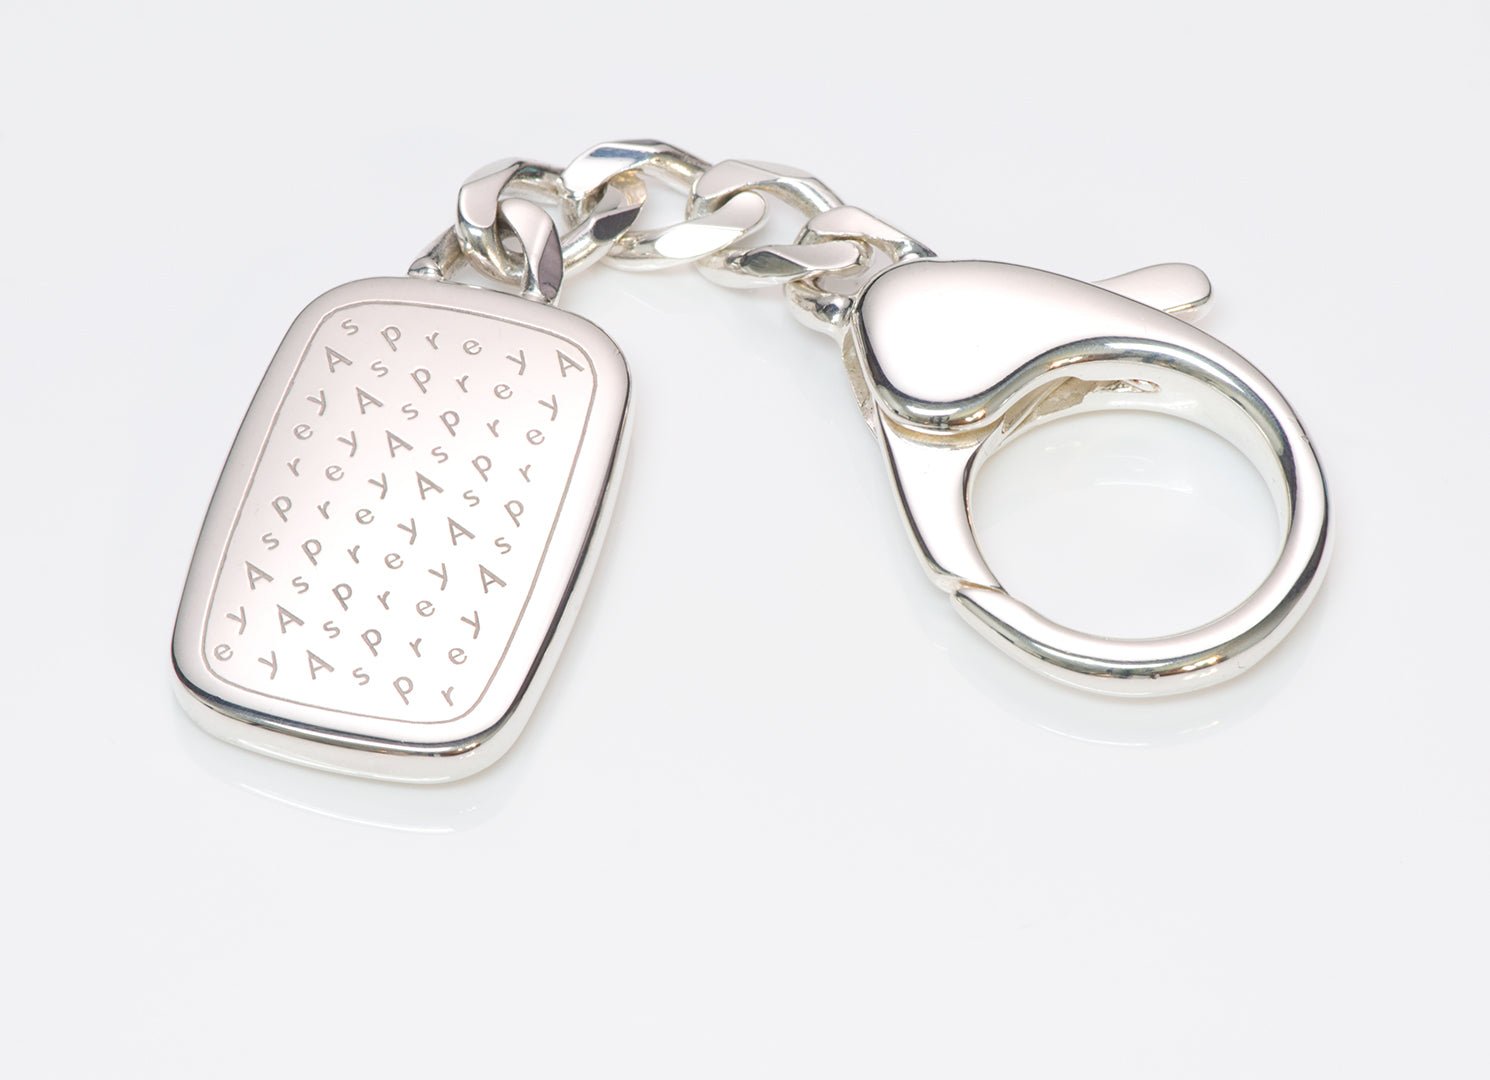 Asprey Sterling Silver Key Ring Chain